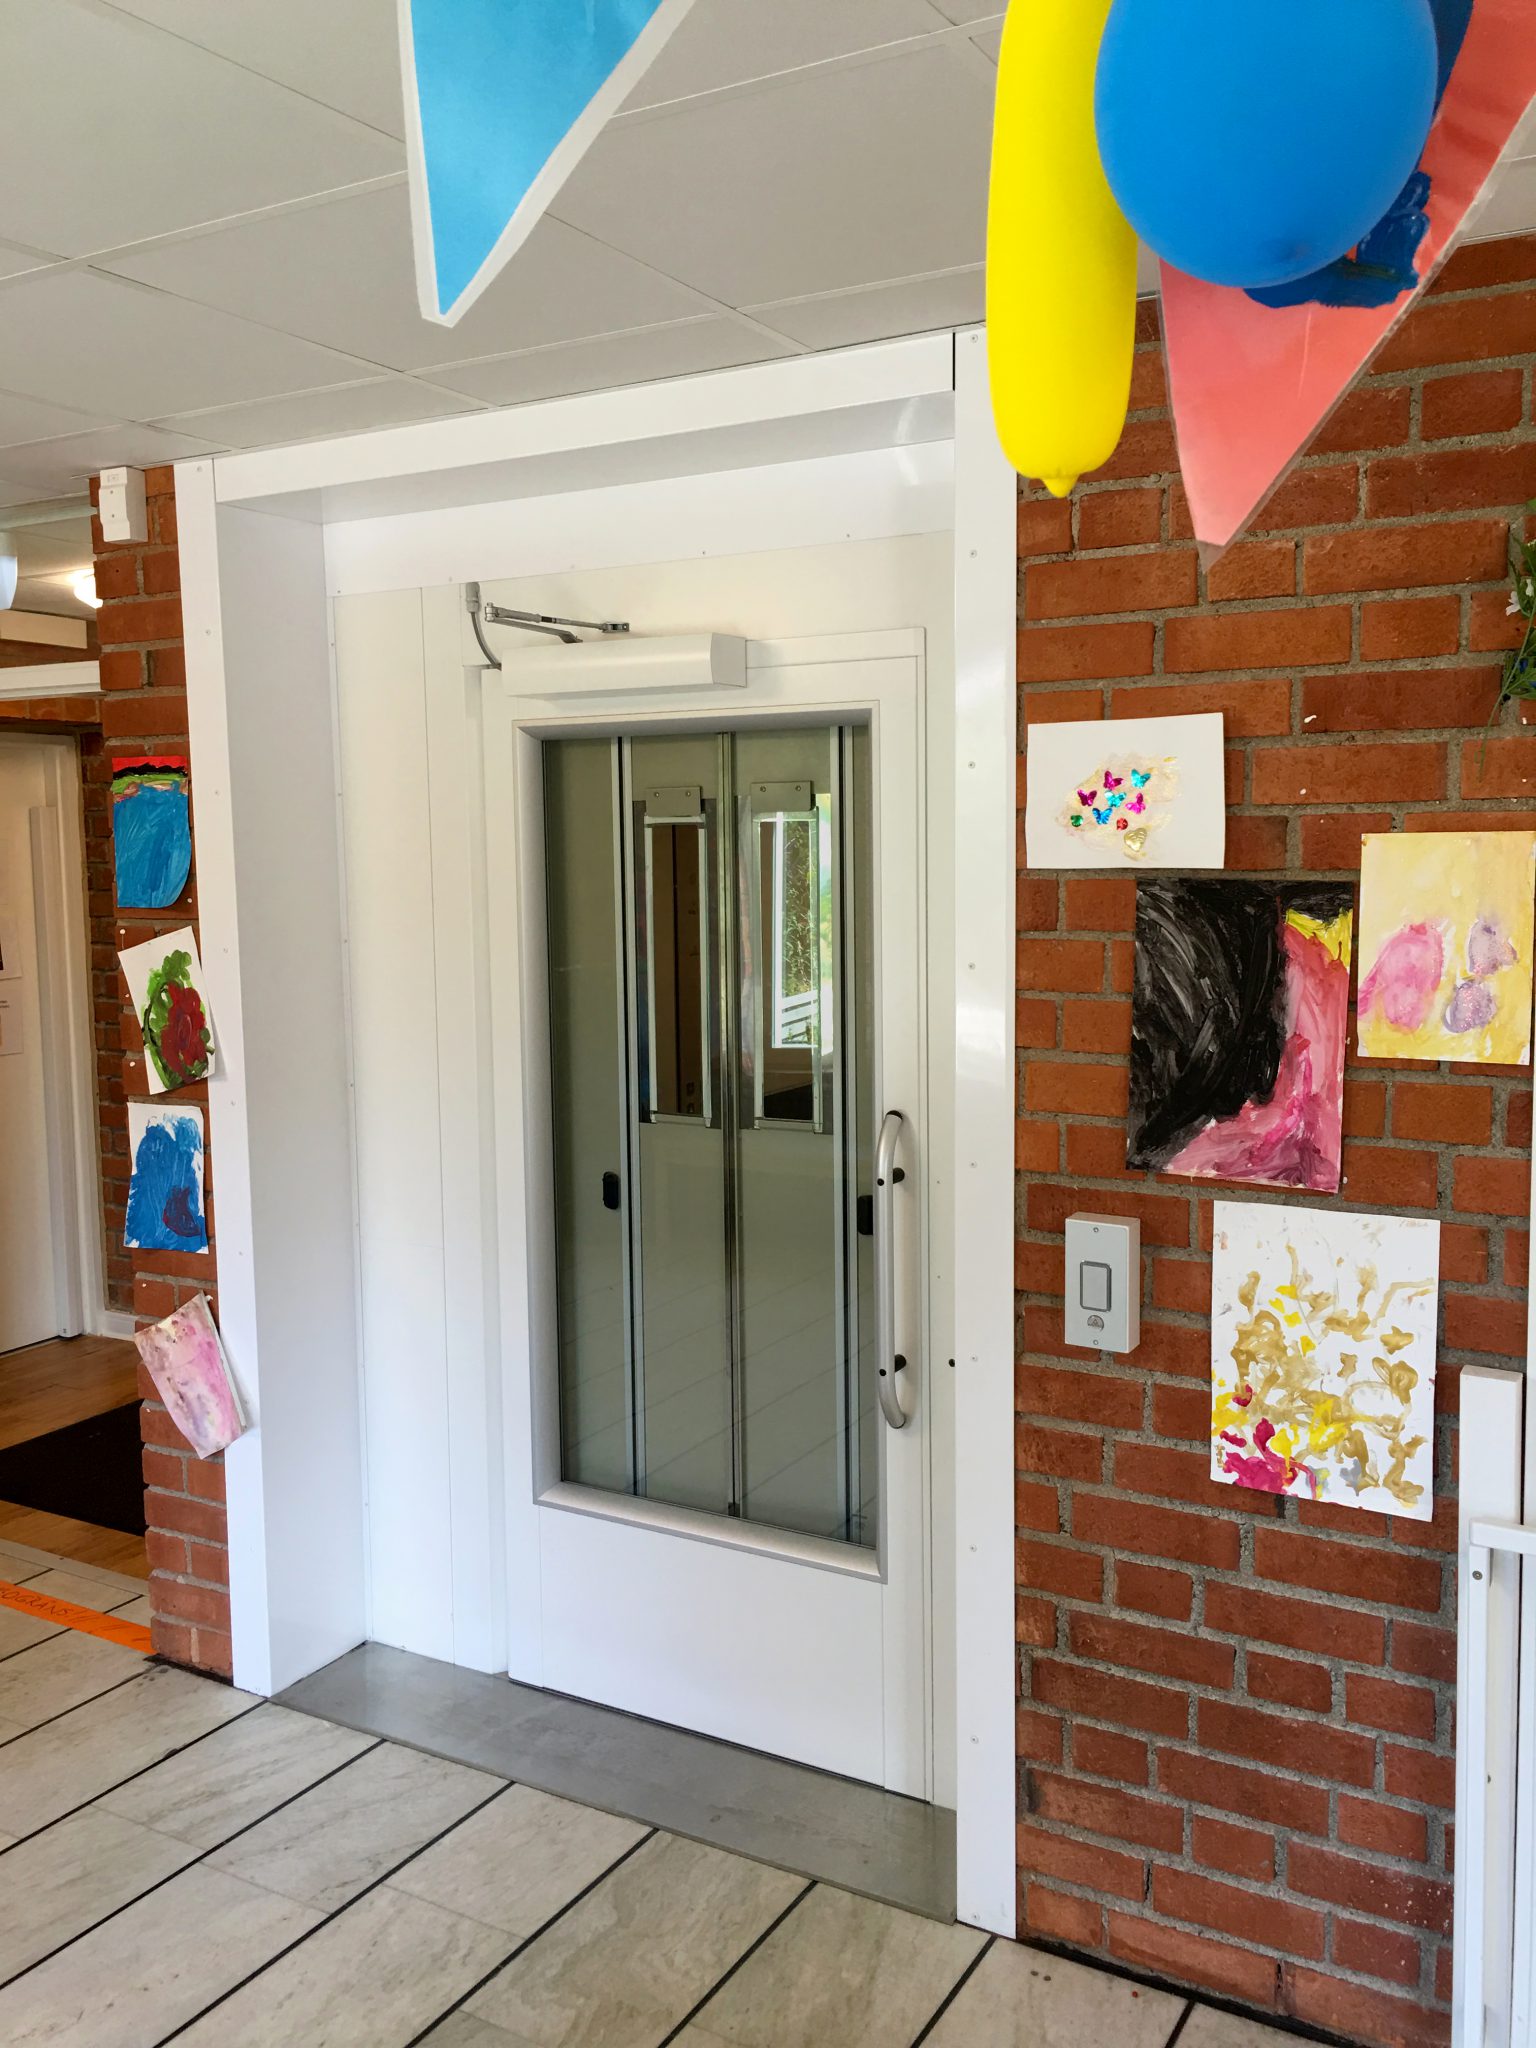 An Aritco lift in a kindergarten